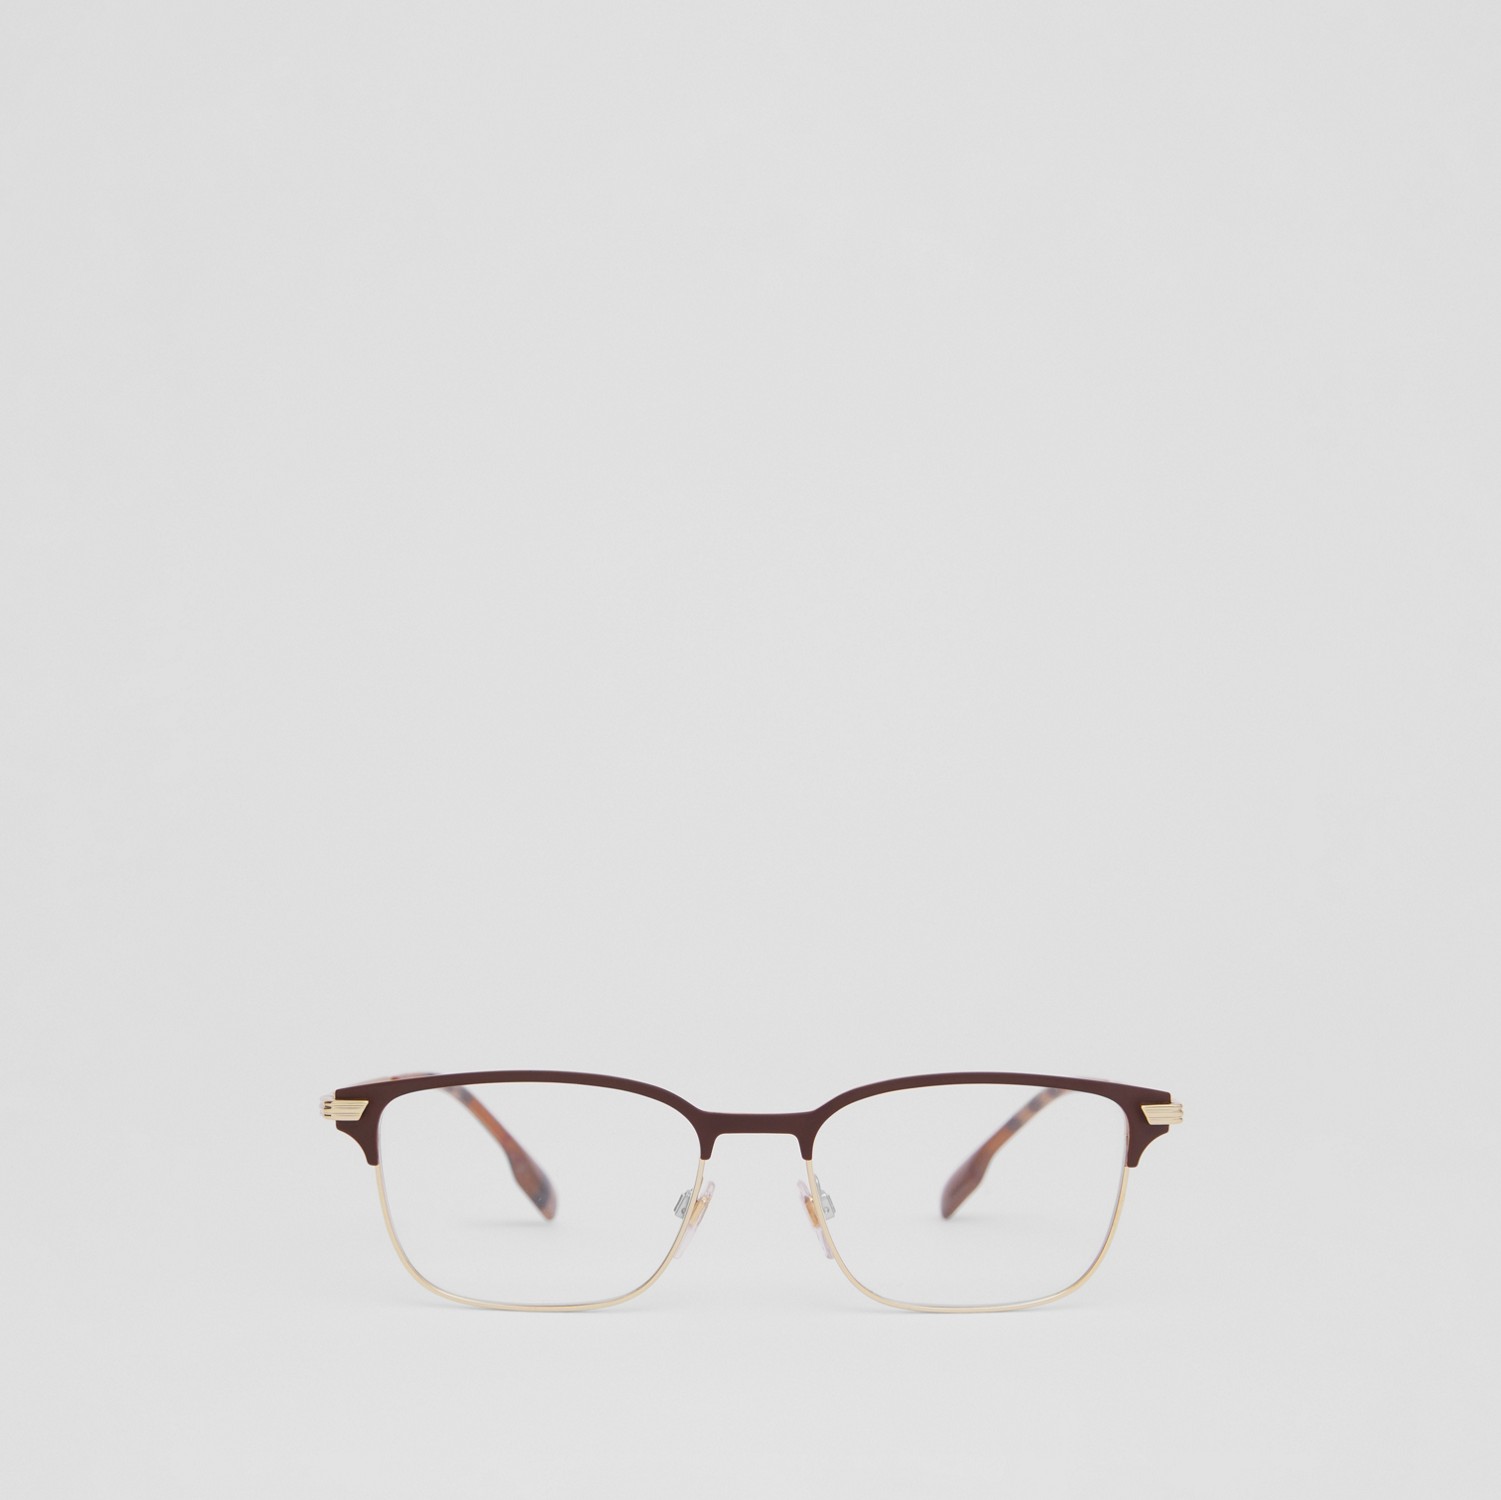 Korrekturbrille mit eckiger Fassung